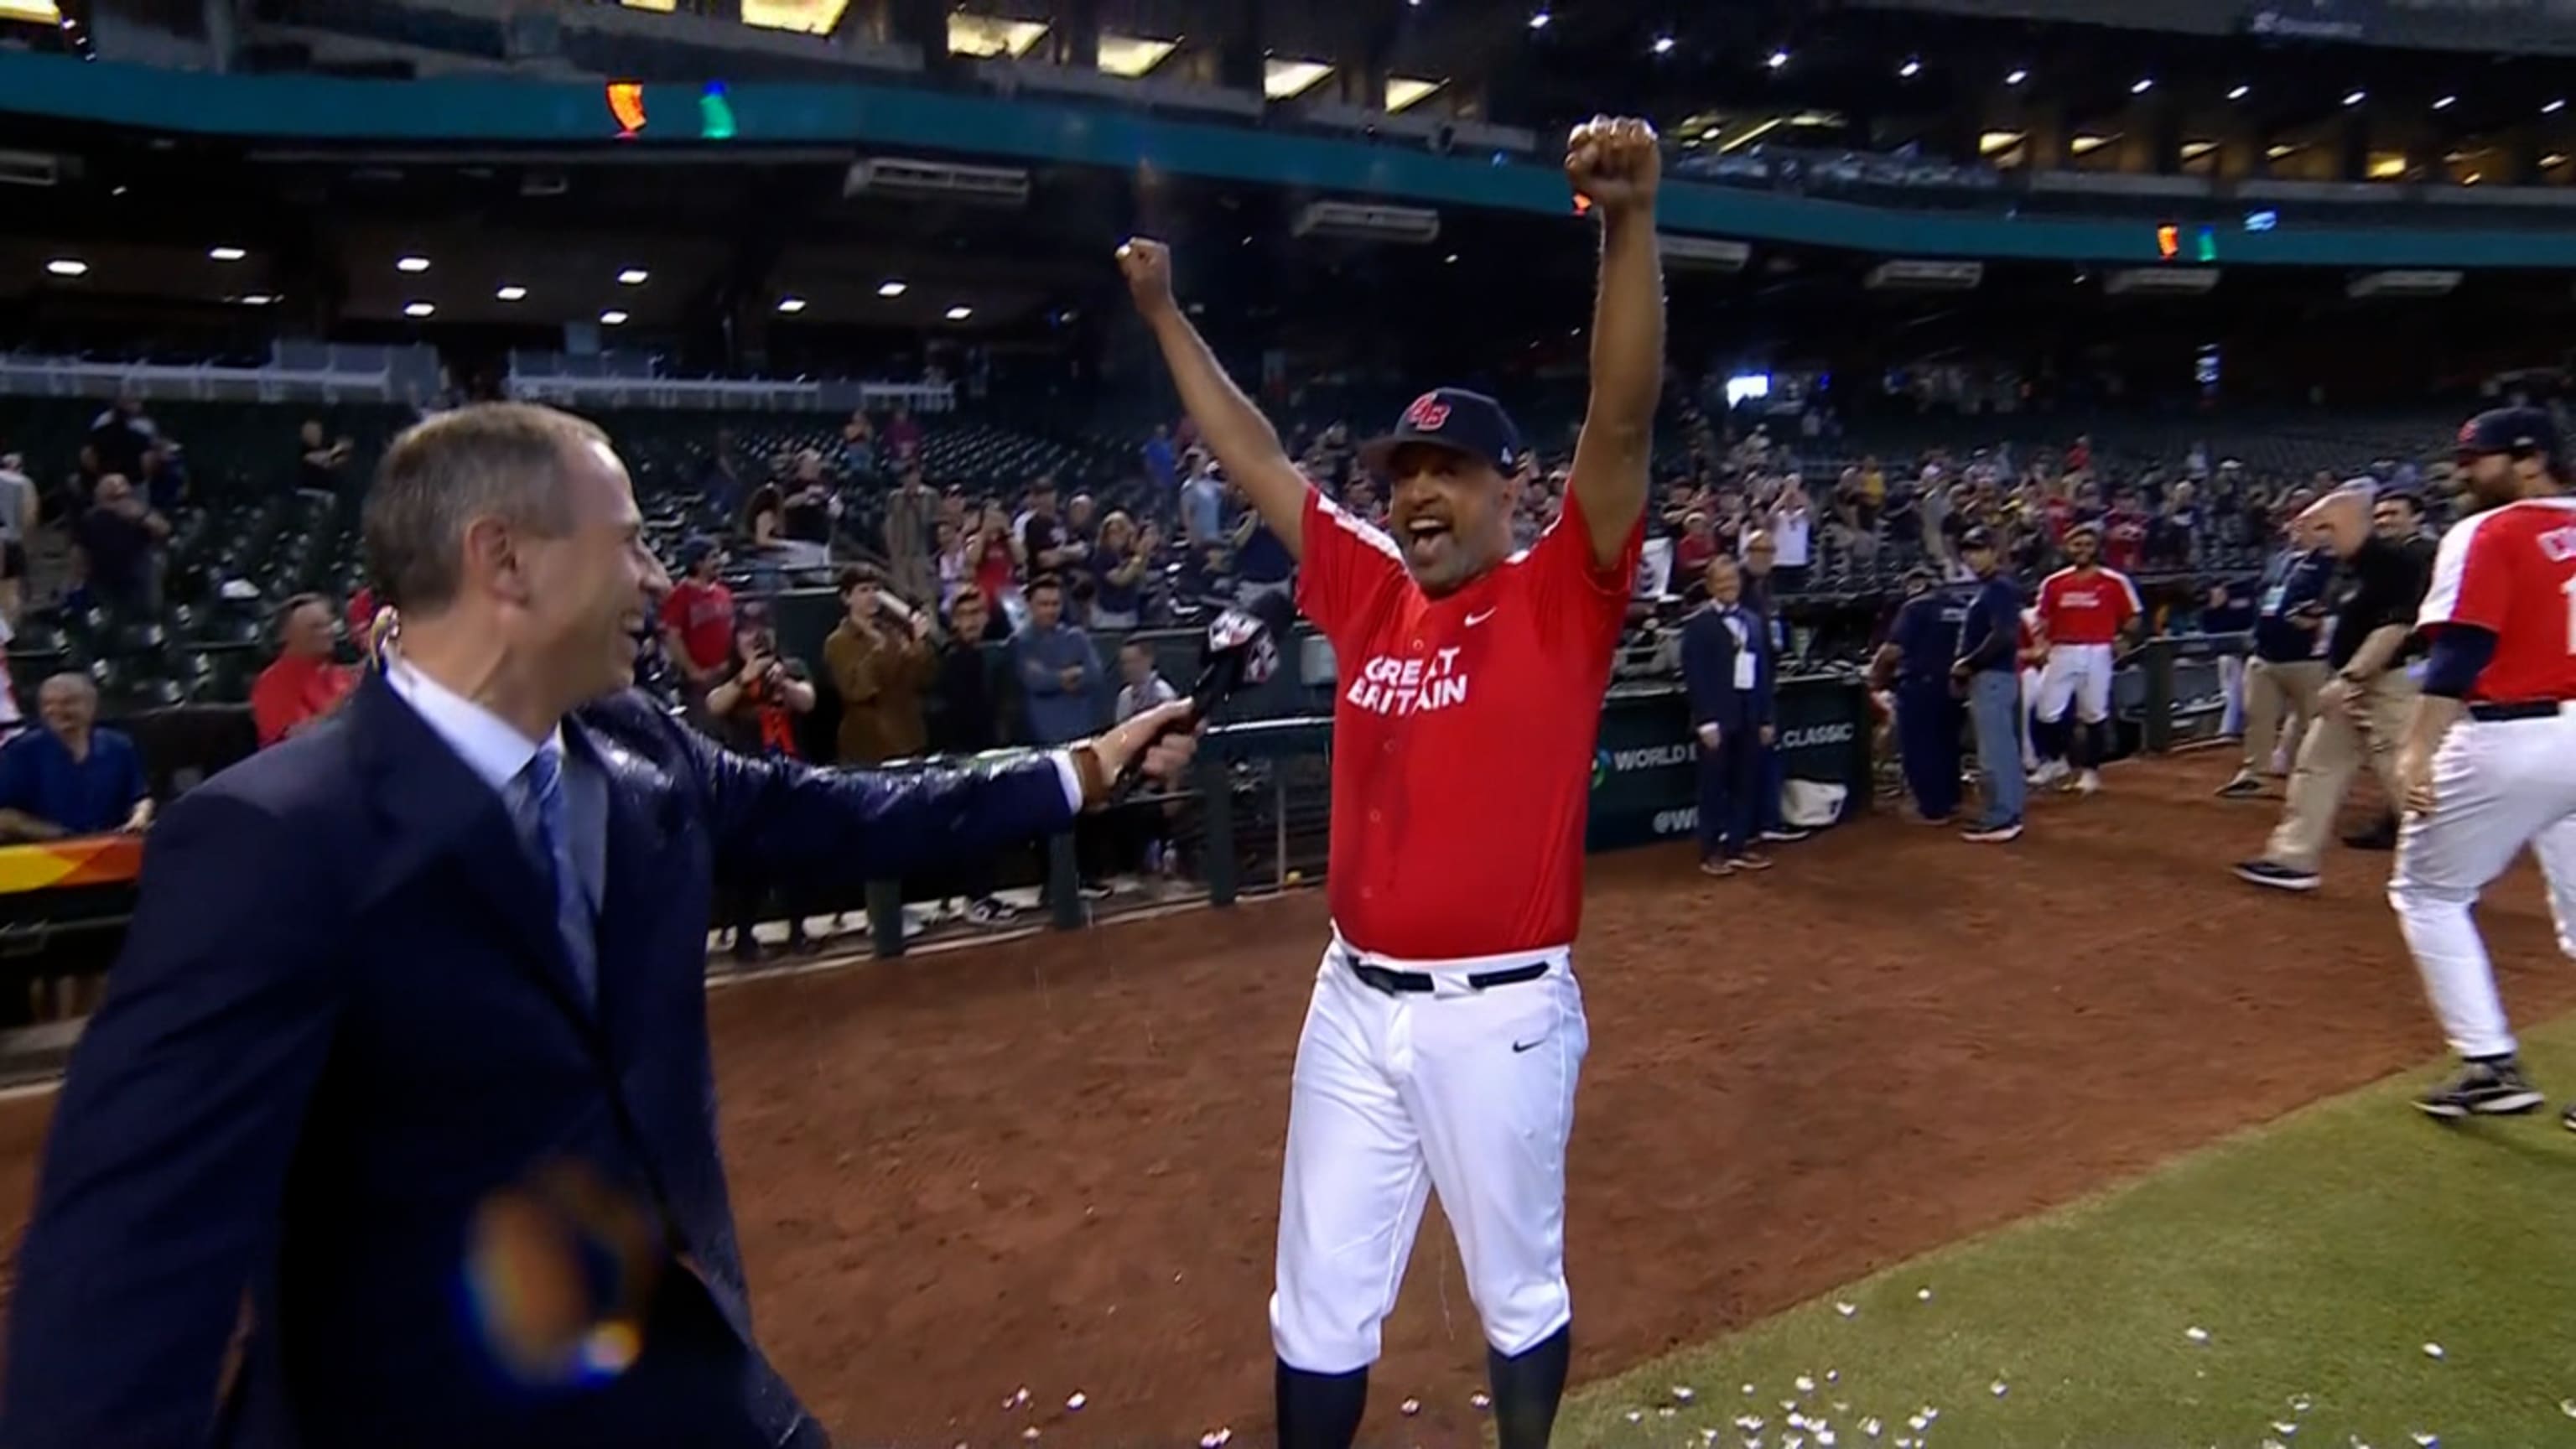 Cardinals win World Series - The Columbian